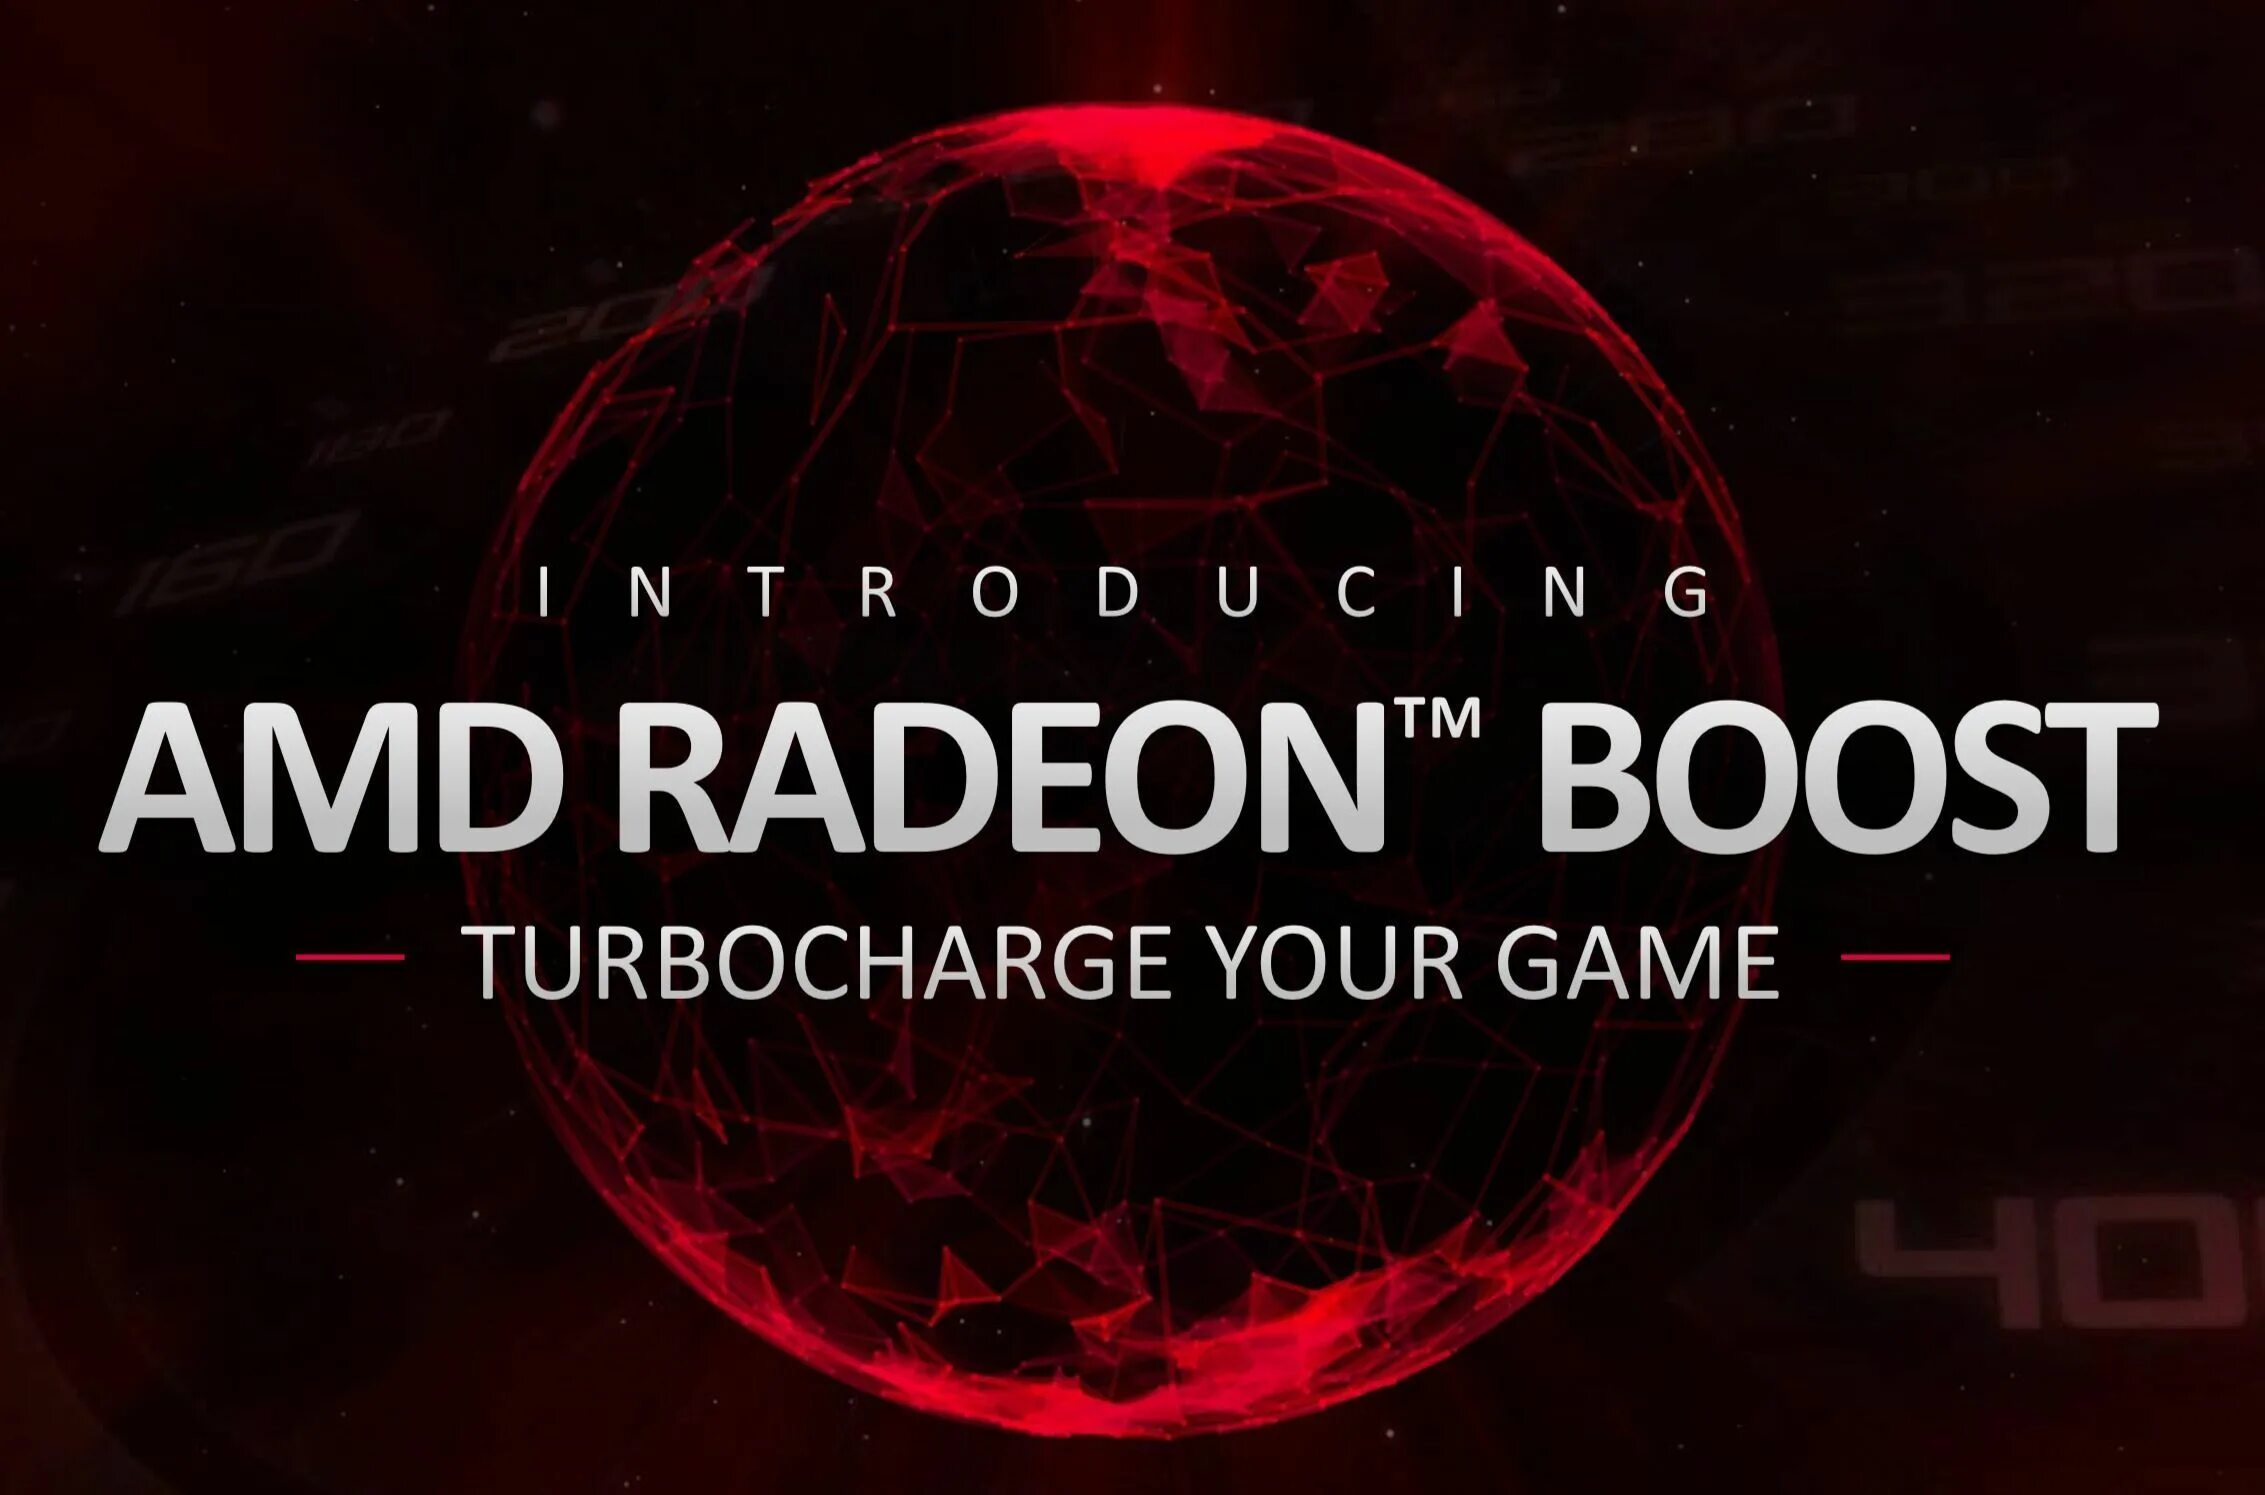 Amd radeon graphics драйвера. AMD Adrenalin 2020 Edition. AMD Radeon Adrenalin 2020. Radeon software Adrenalin 2020 Edition. Radeon Adrenalin 2020 Edition.